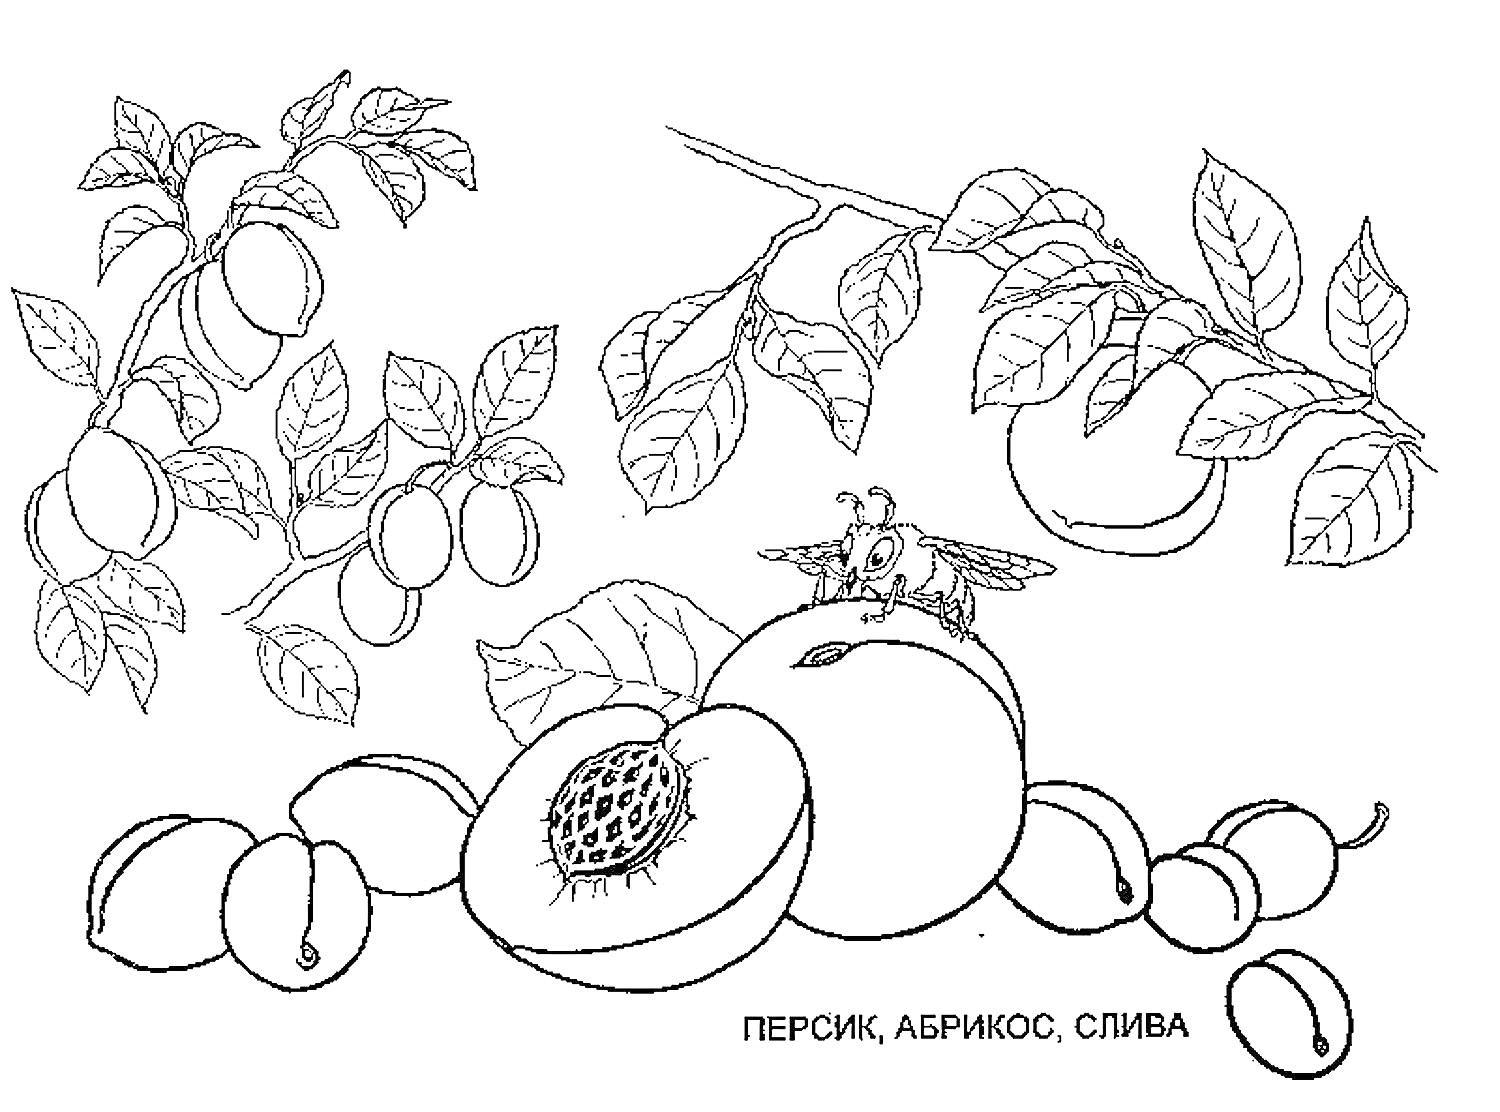 Персик, абрикос, слива на ветках и в разрезе, пчела на персике